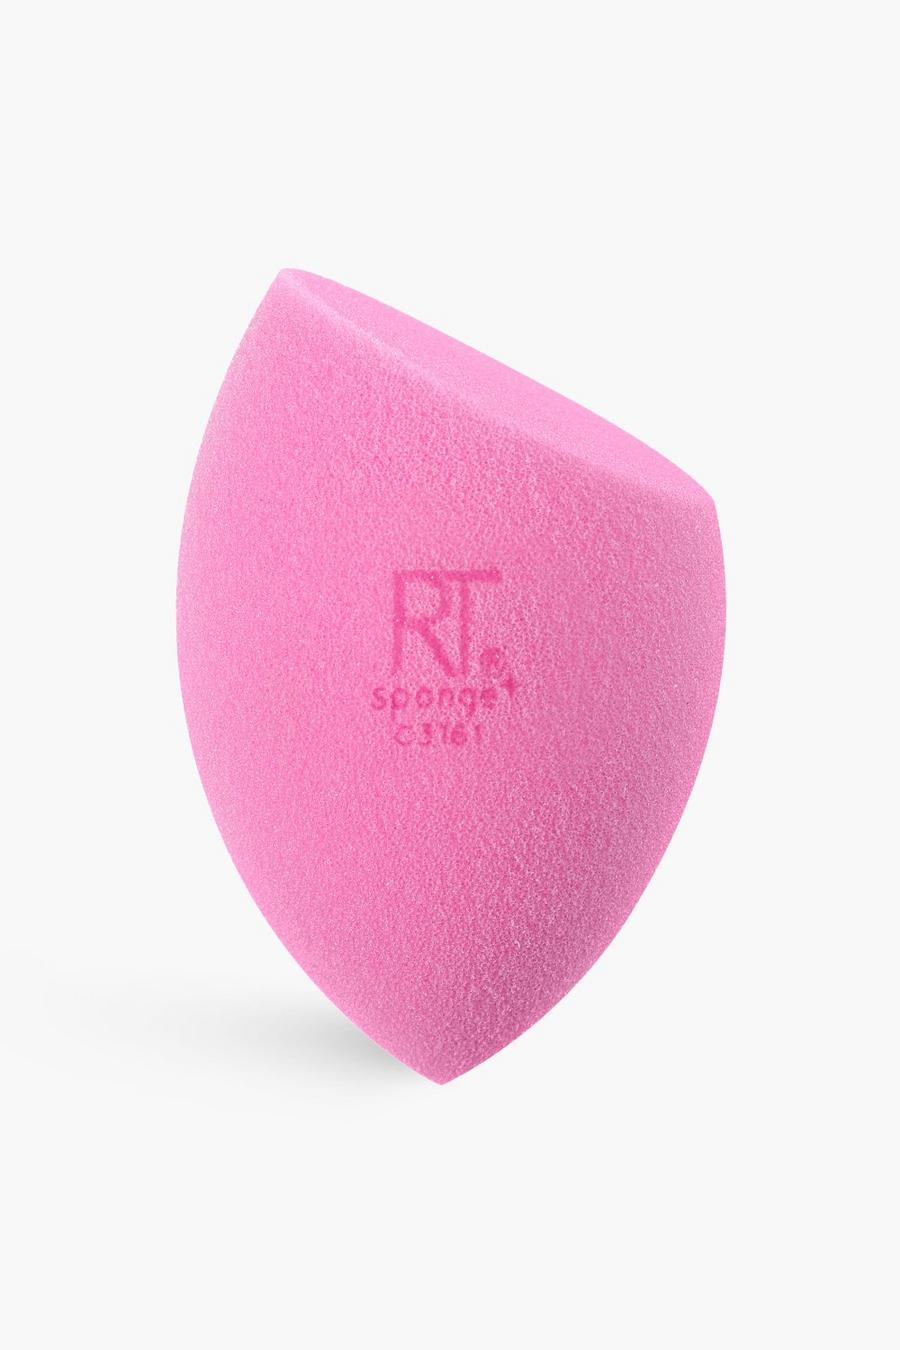 Pink rosa ספוגית קסם Chroma Miracle Sponge של Real Techniques